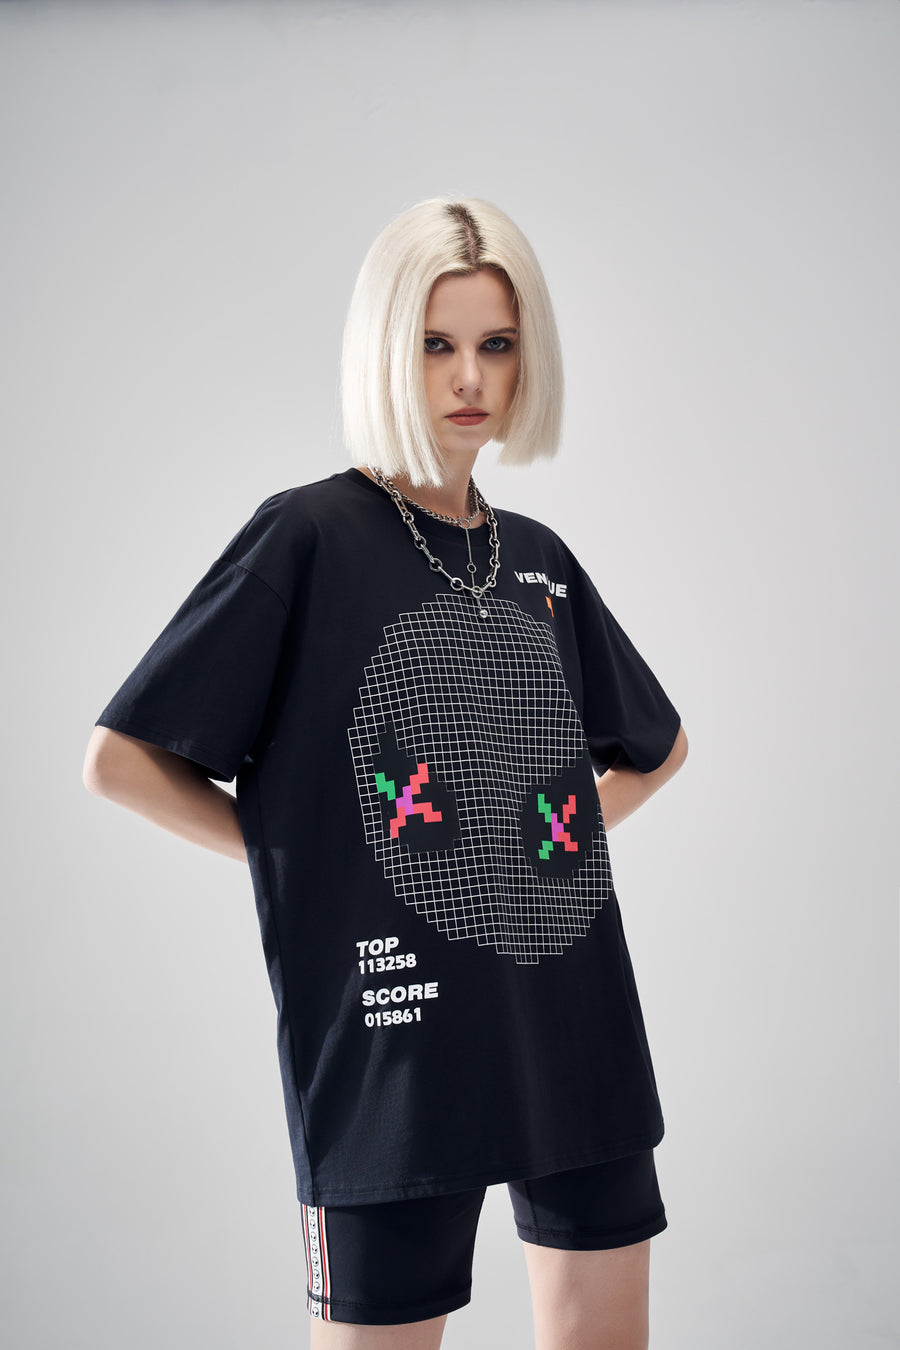 "TETRIS x VENQUE" T-shirt